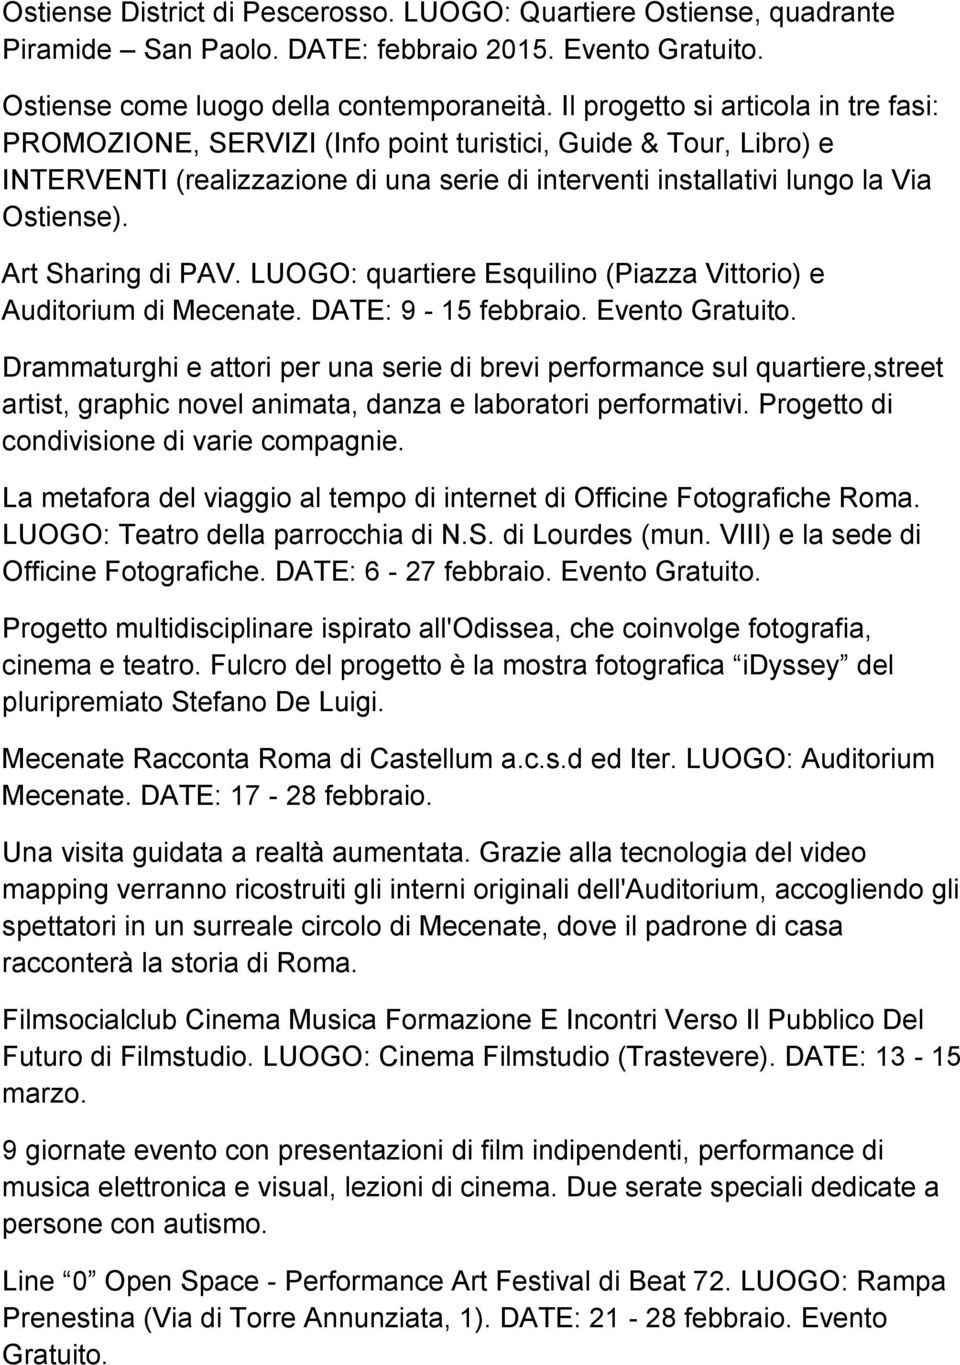 Art Sharing di PAV. LUOGO: quartiere Esquilino (Piazza Vittorio) e Auditorium di Mecenate. DATE: 9-15 febbraio. Evento Gratuito.